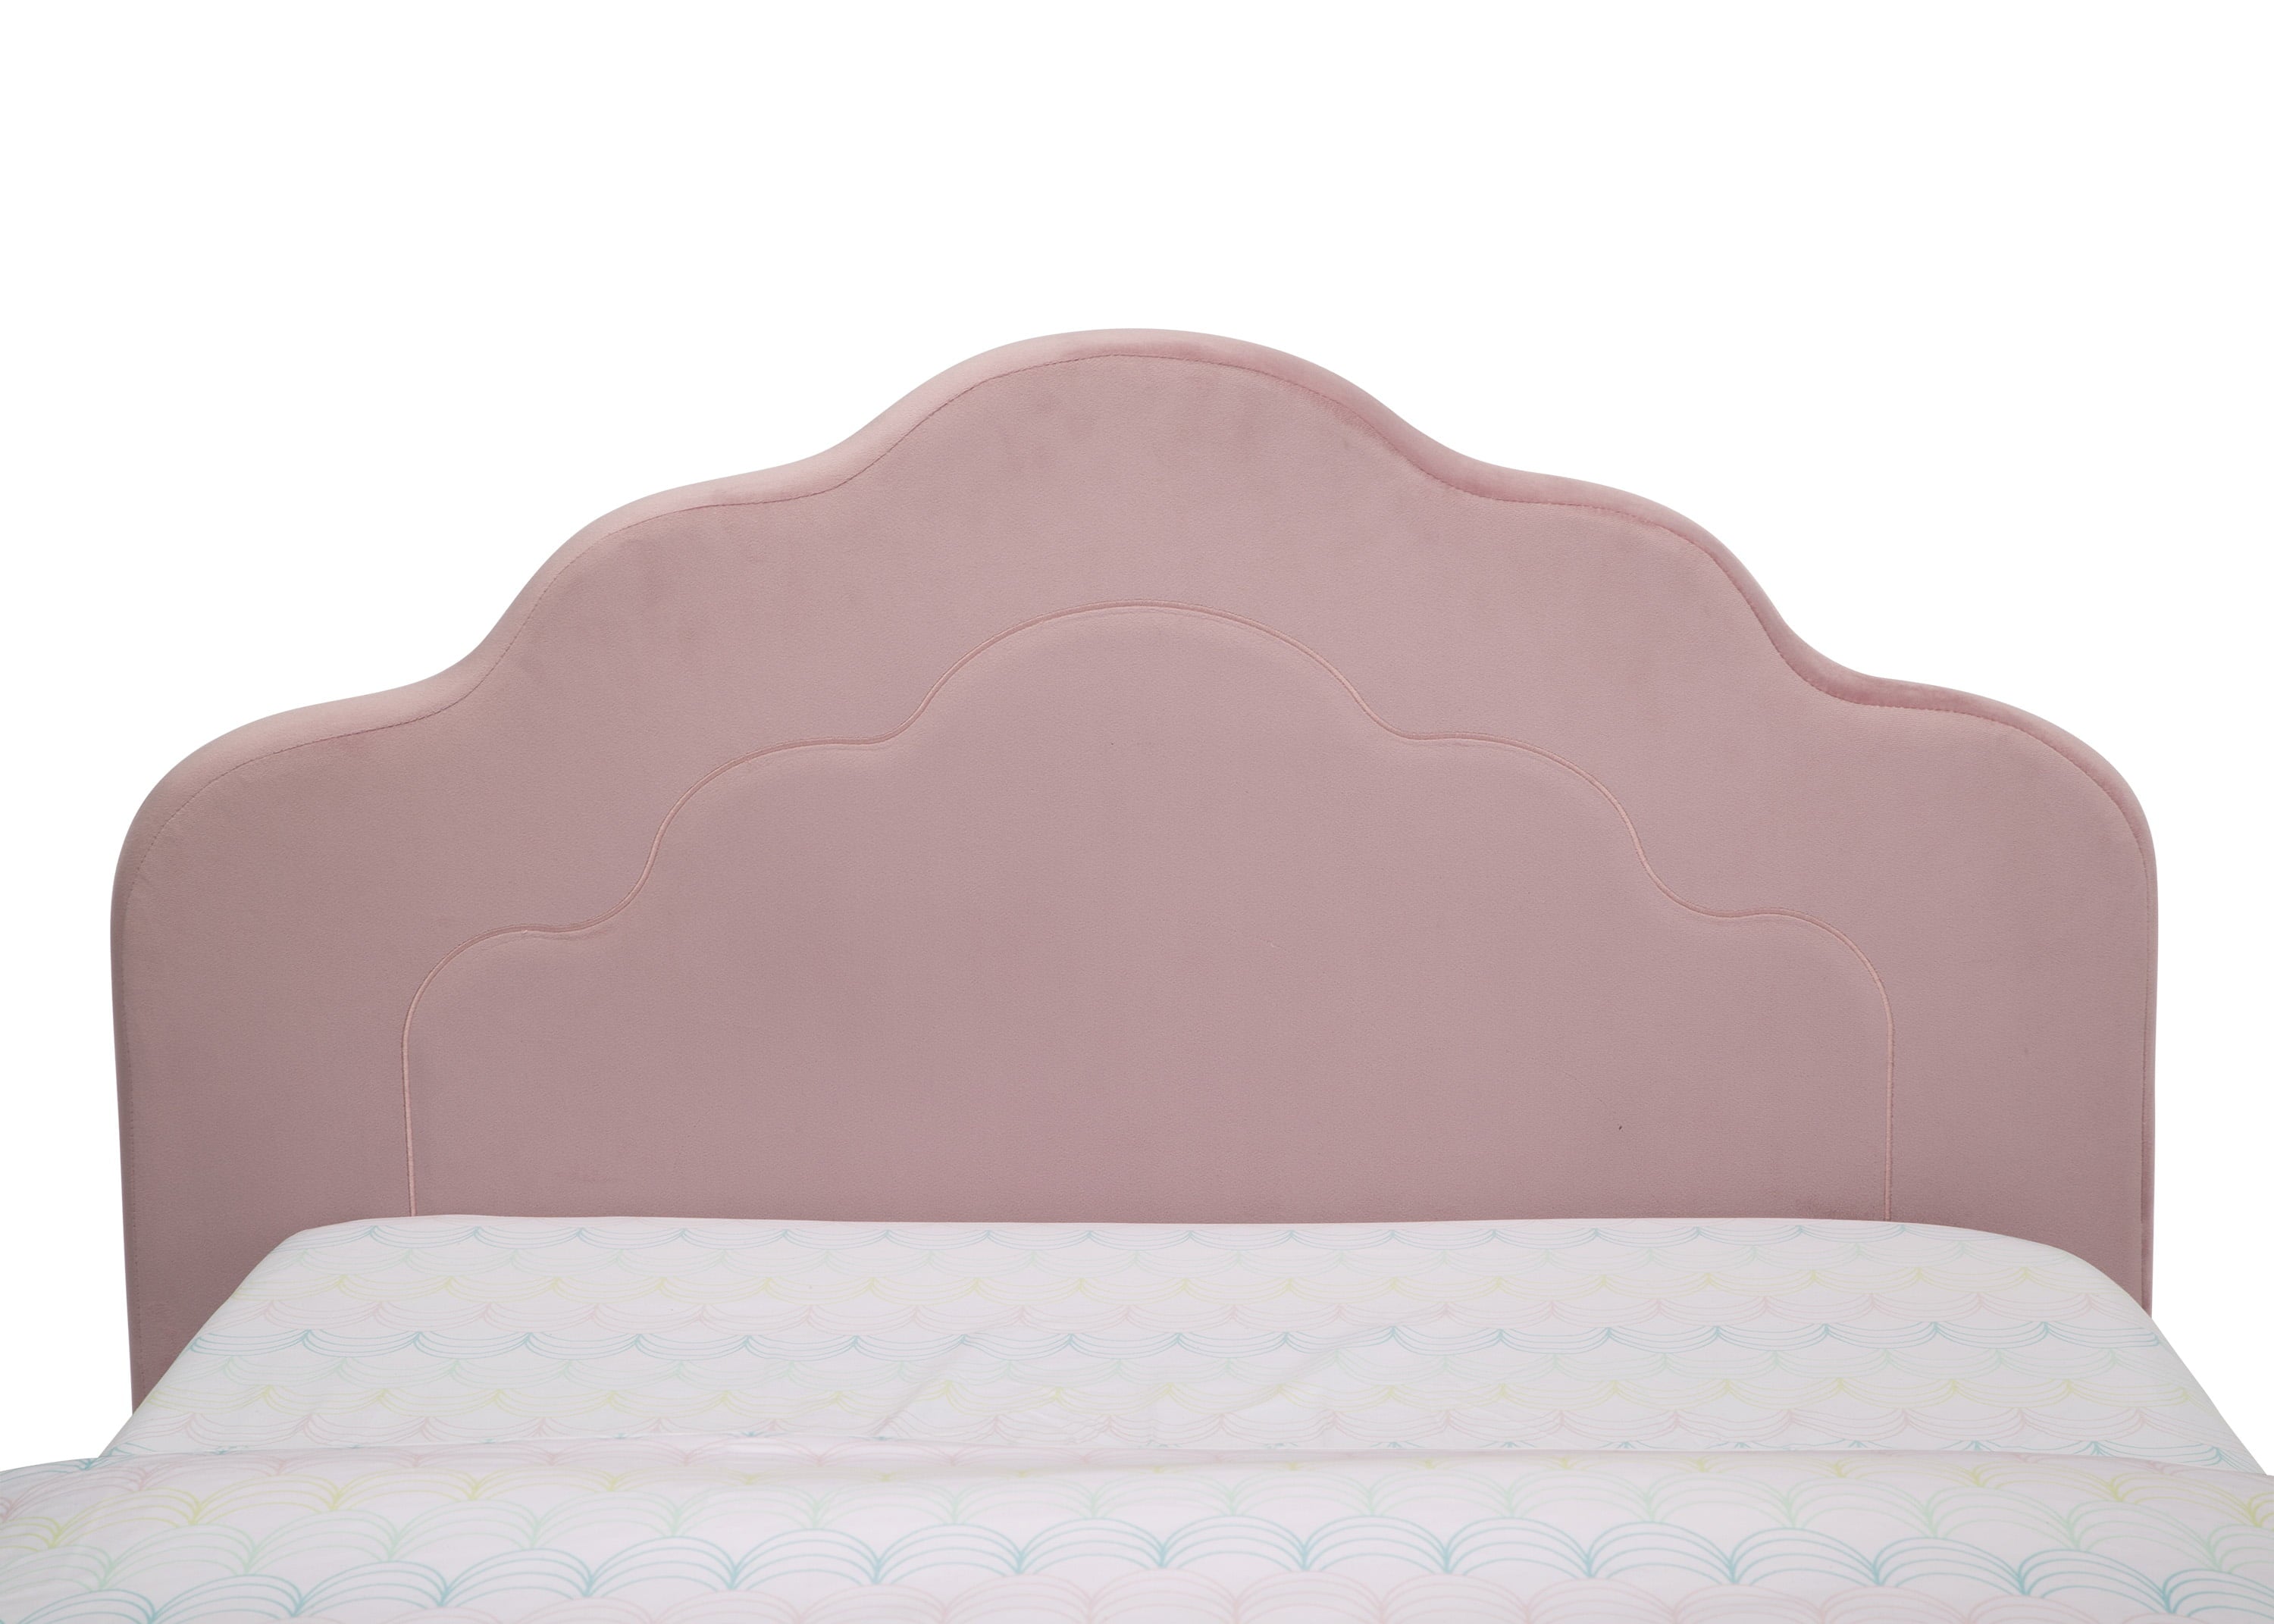 Delta Children Comfort Wood Upholstered Bed, Twin, Rose Pink